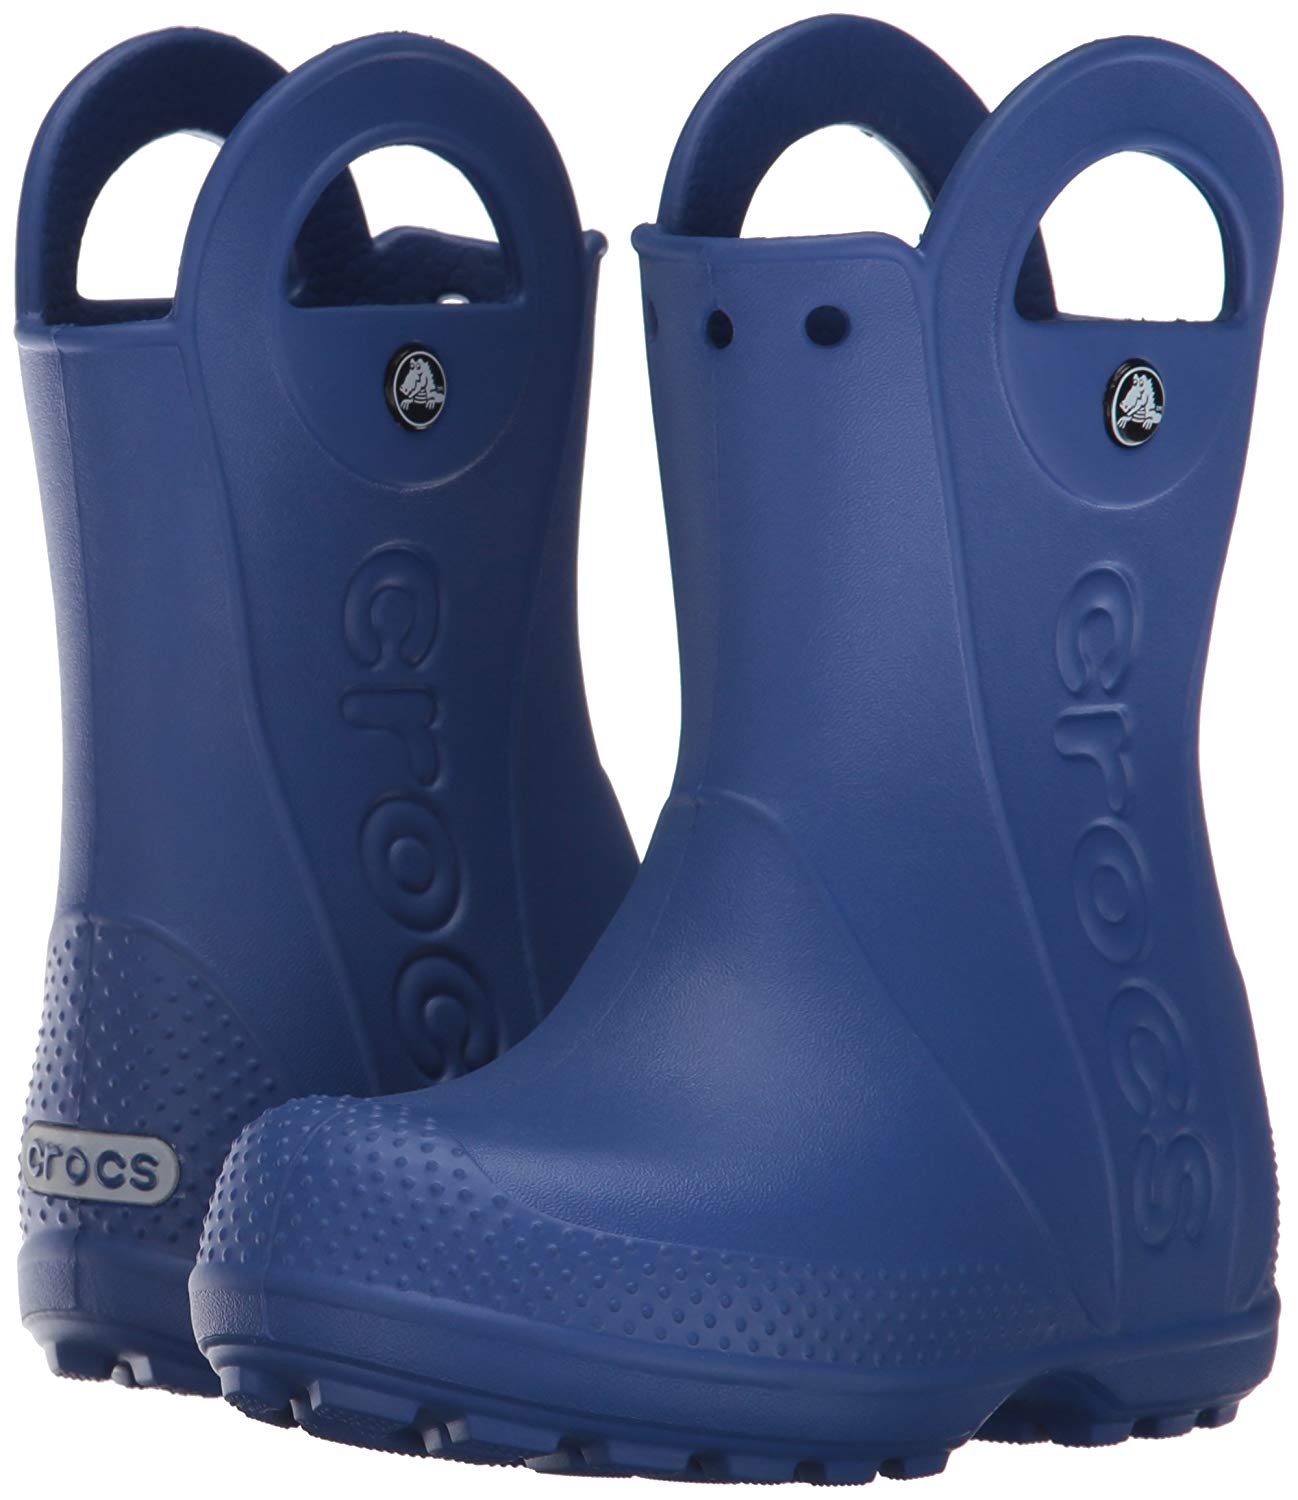 Crocs Kids' Handle It Rain Boot, Cerulean Blue, Size 10.0 mprM | eBay